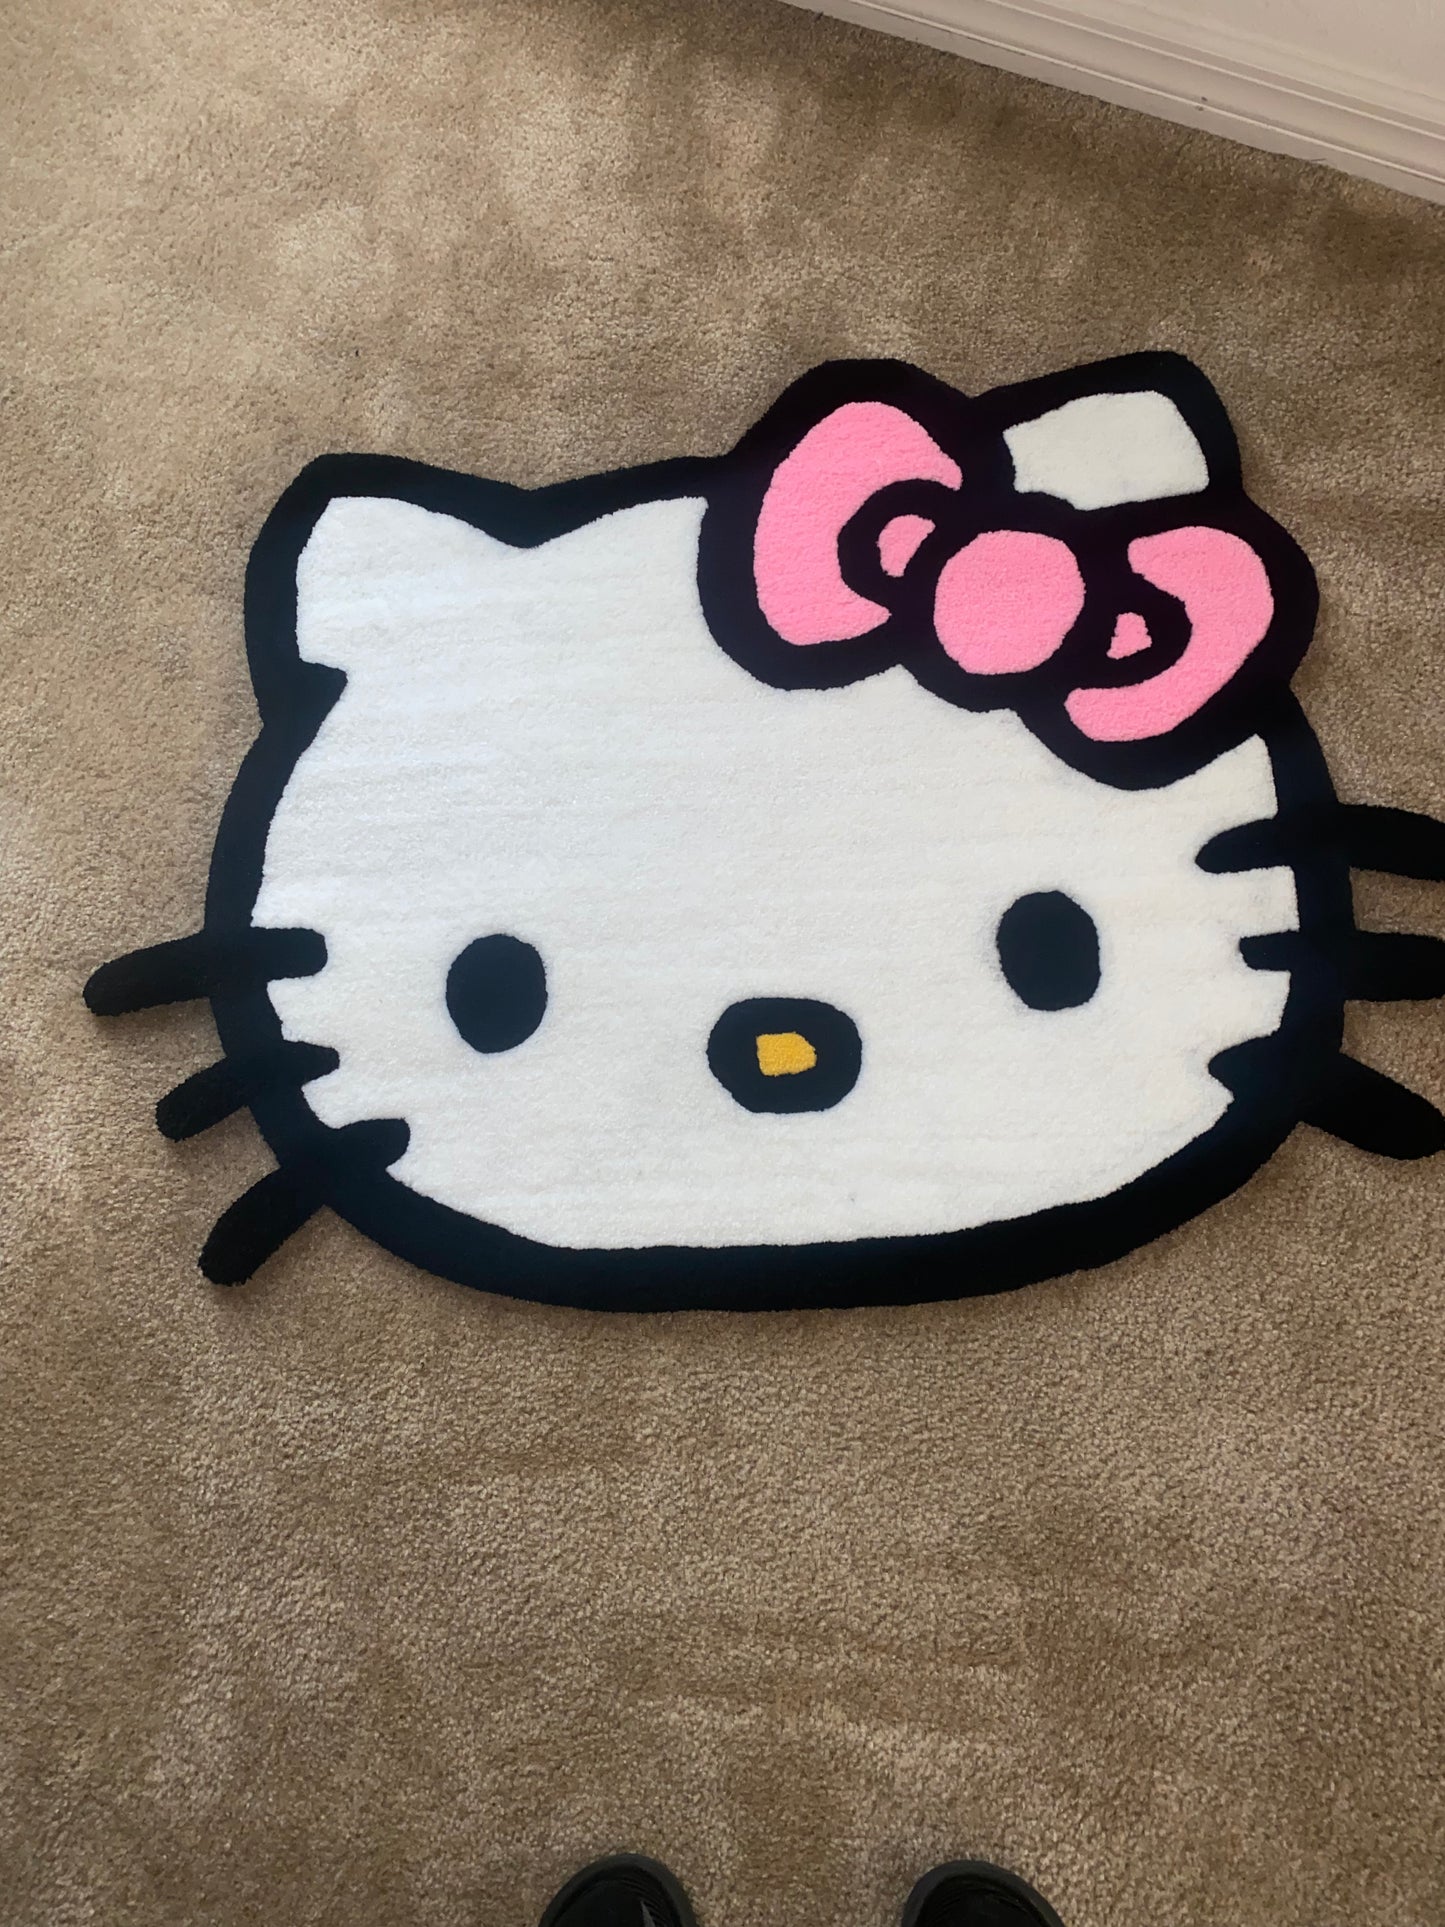 Custom “Hello Kitty” Handmade Rug